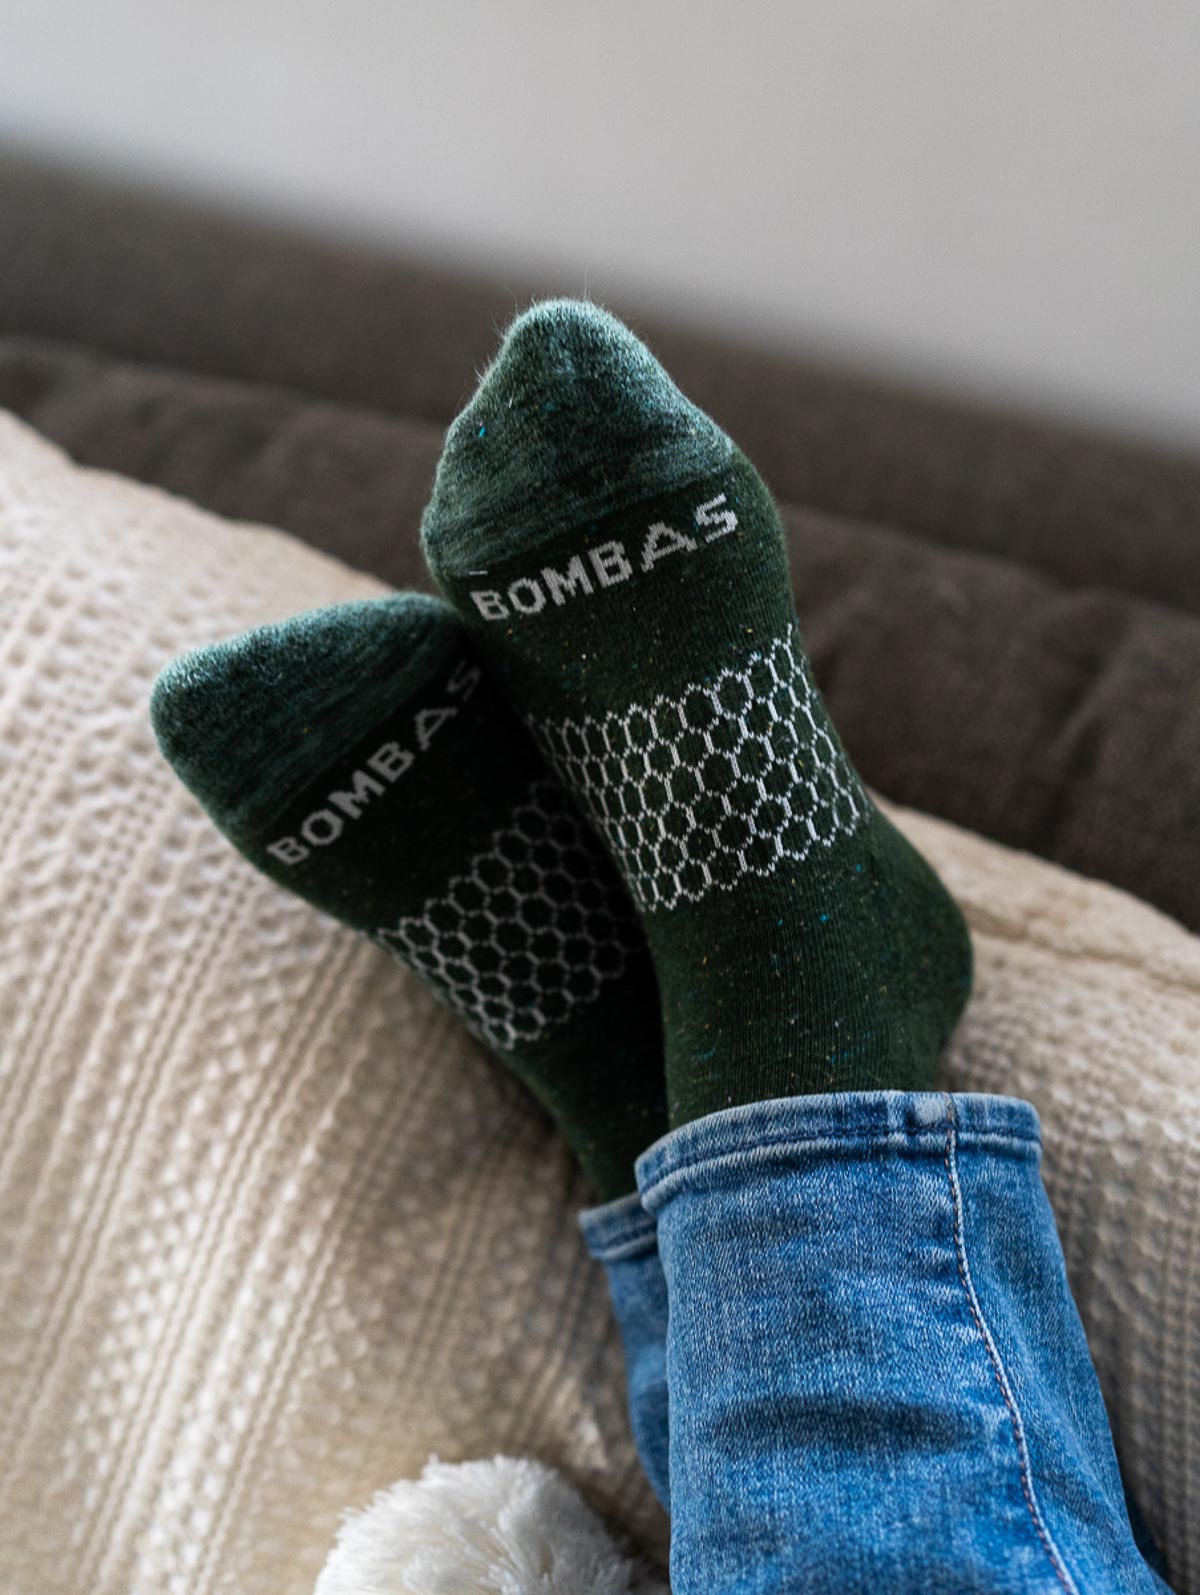 Bombas Socks Review
